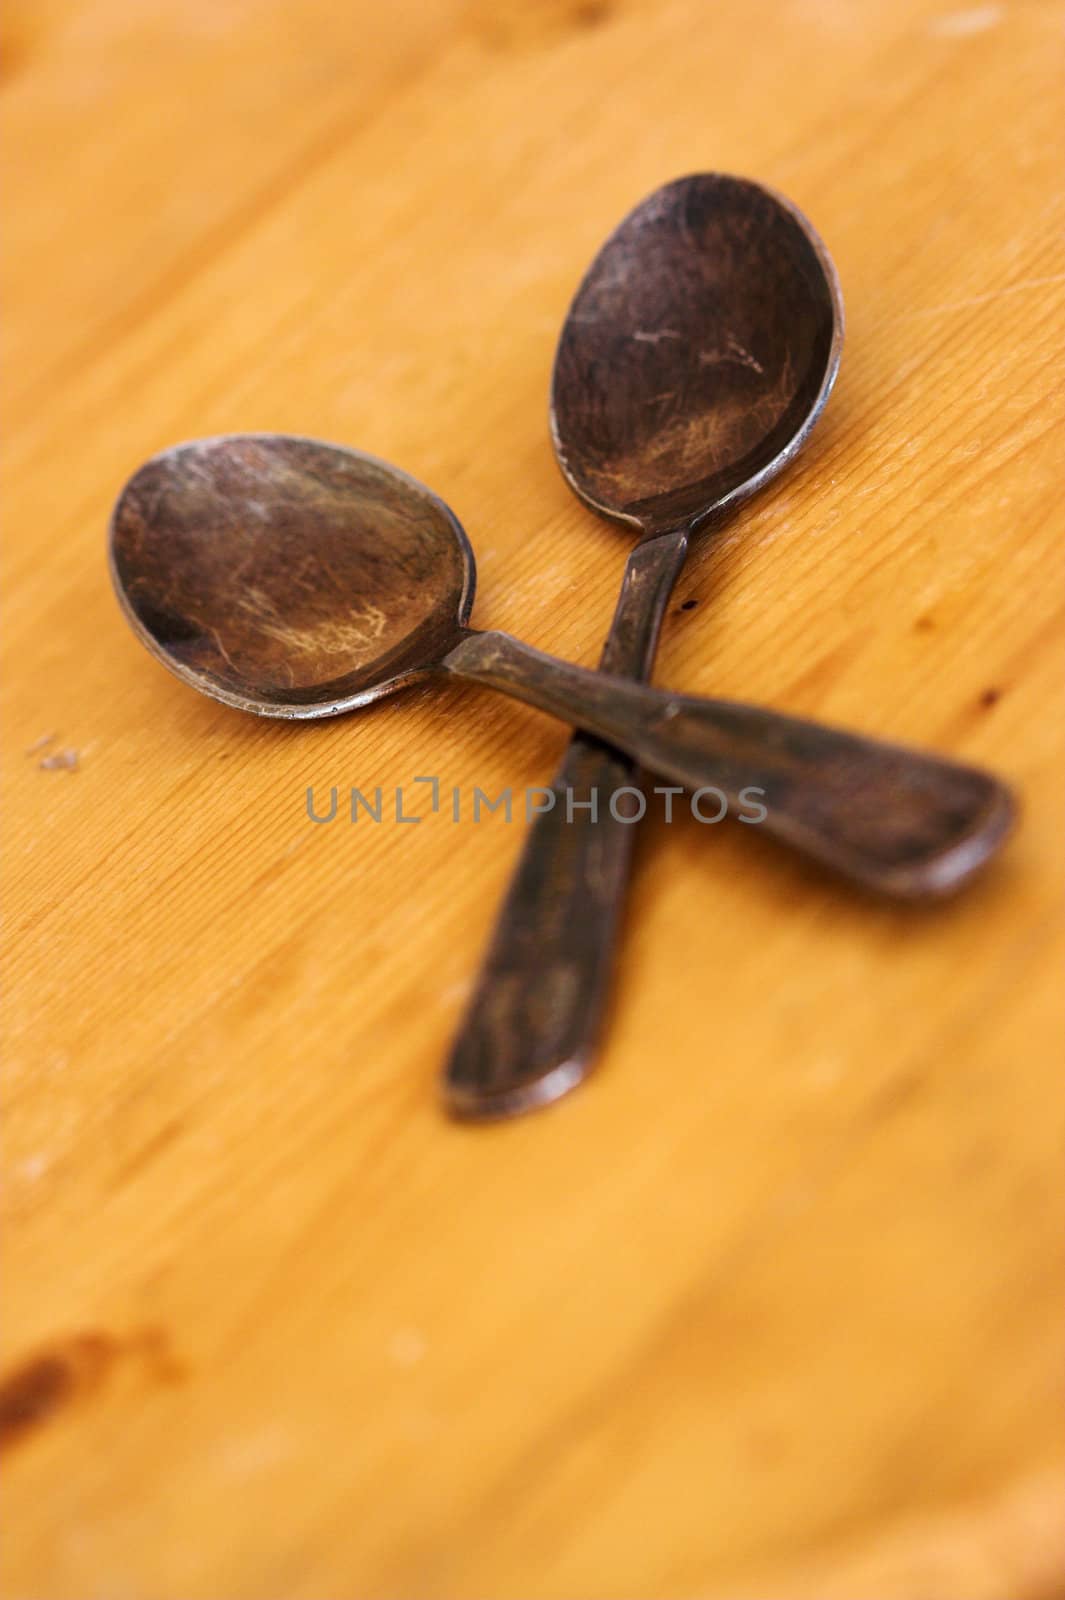  spoons by alexkosev